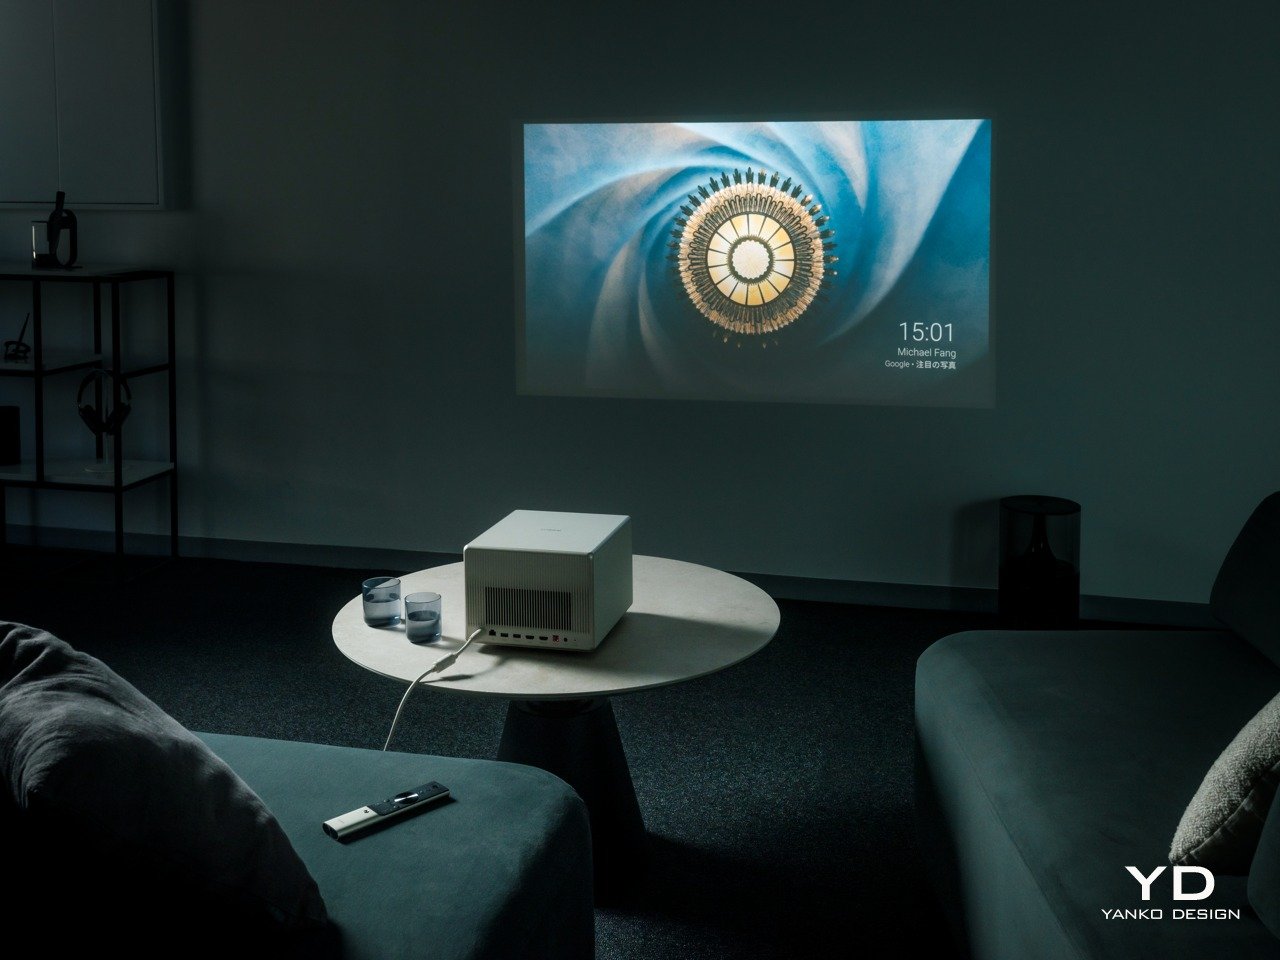 Dangbei Mars Pro 4K projector review - Finally true 4K resolution - The  Gadgeteer